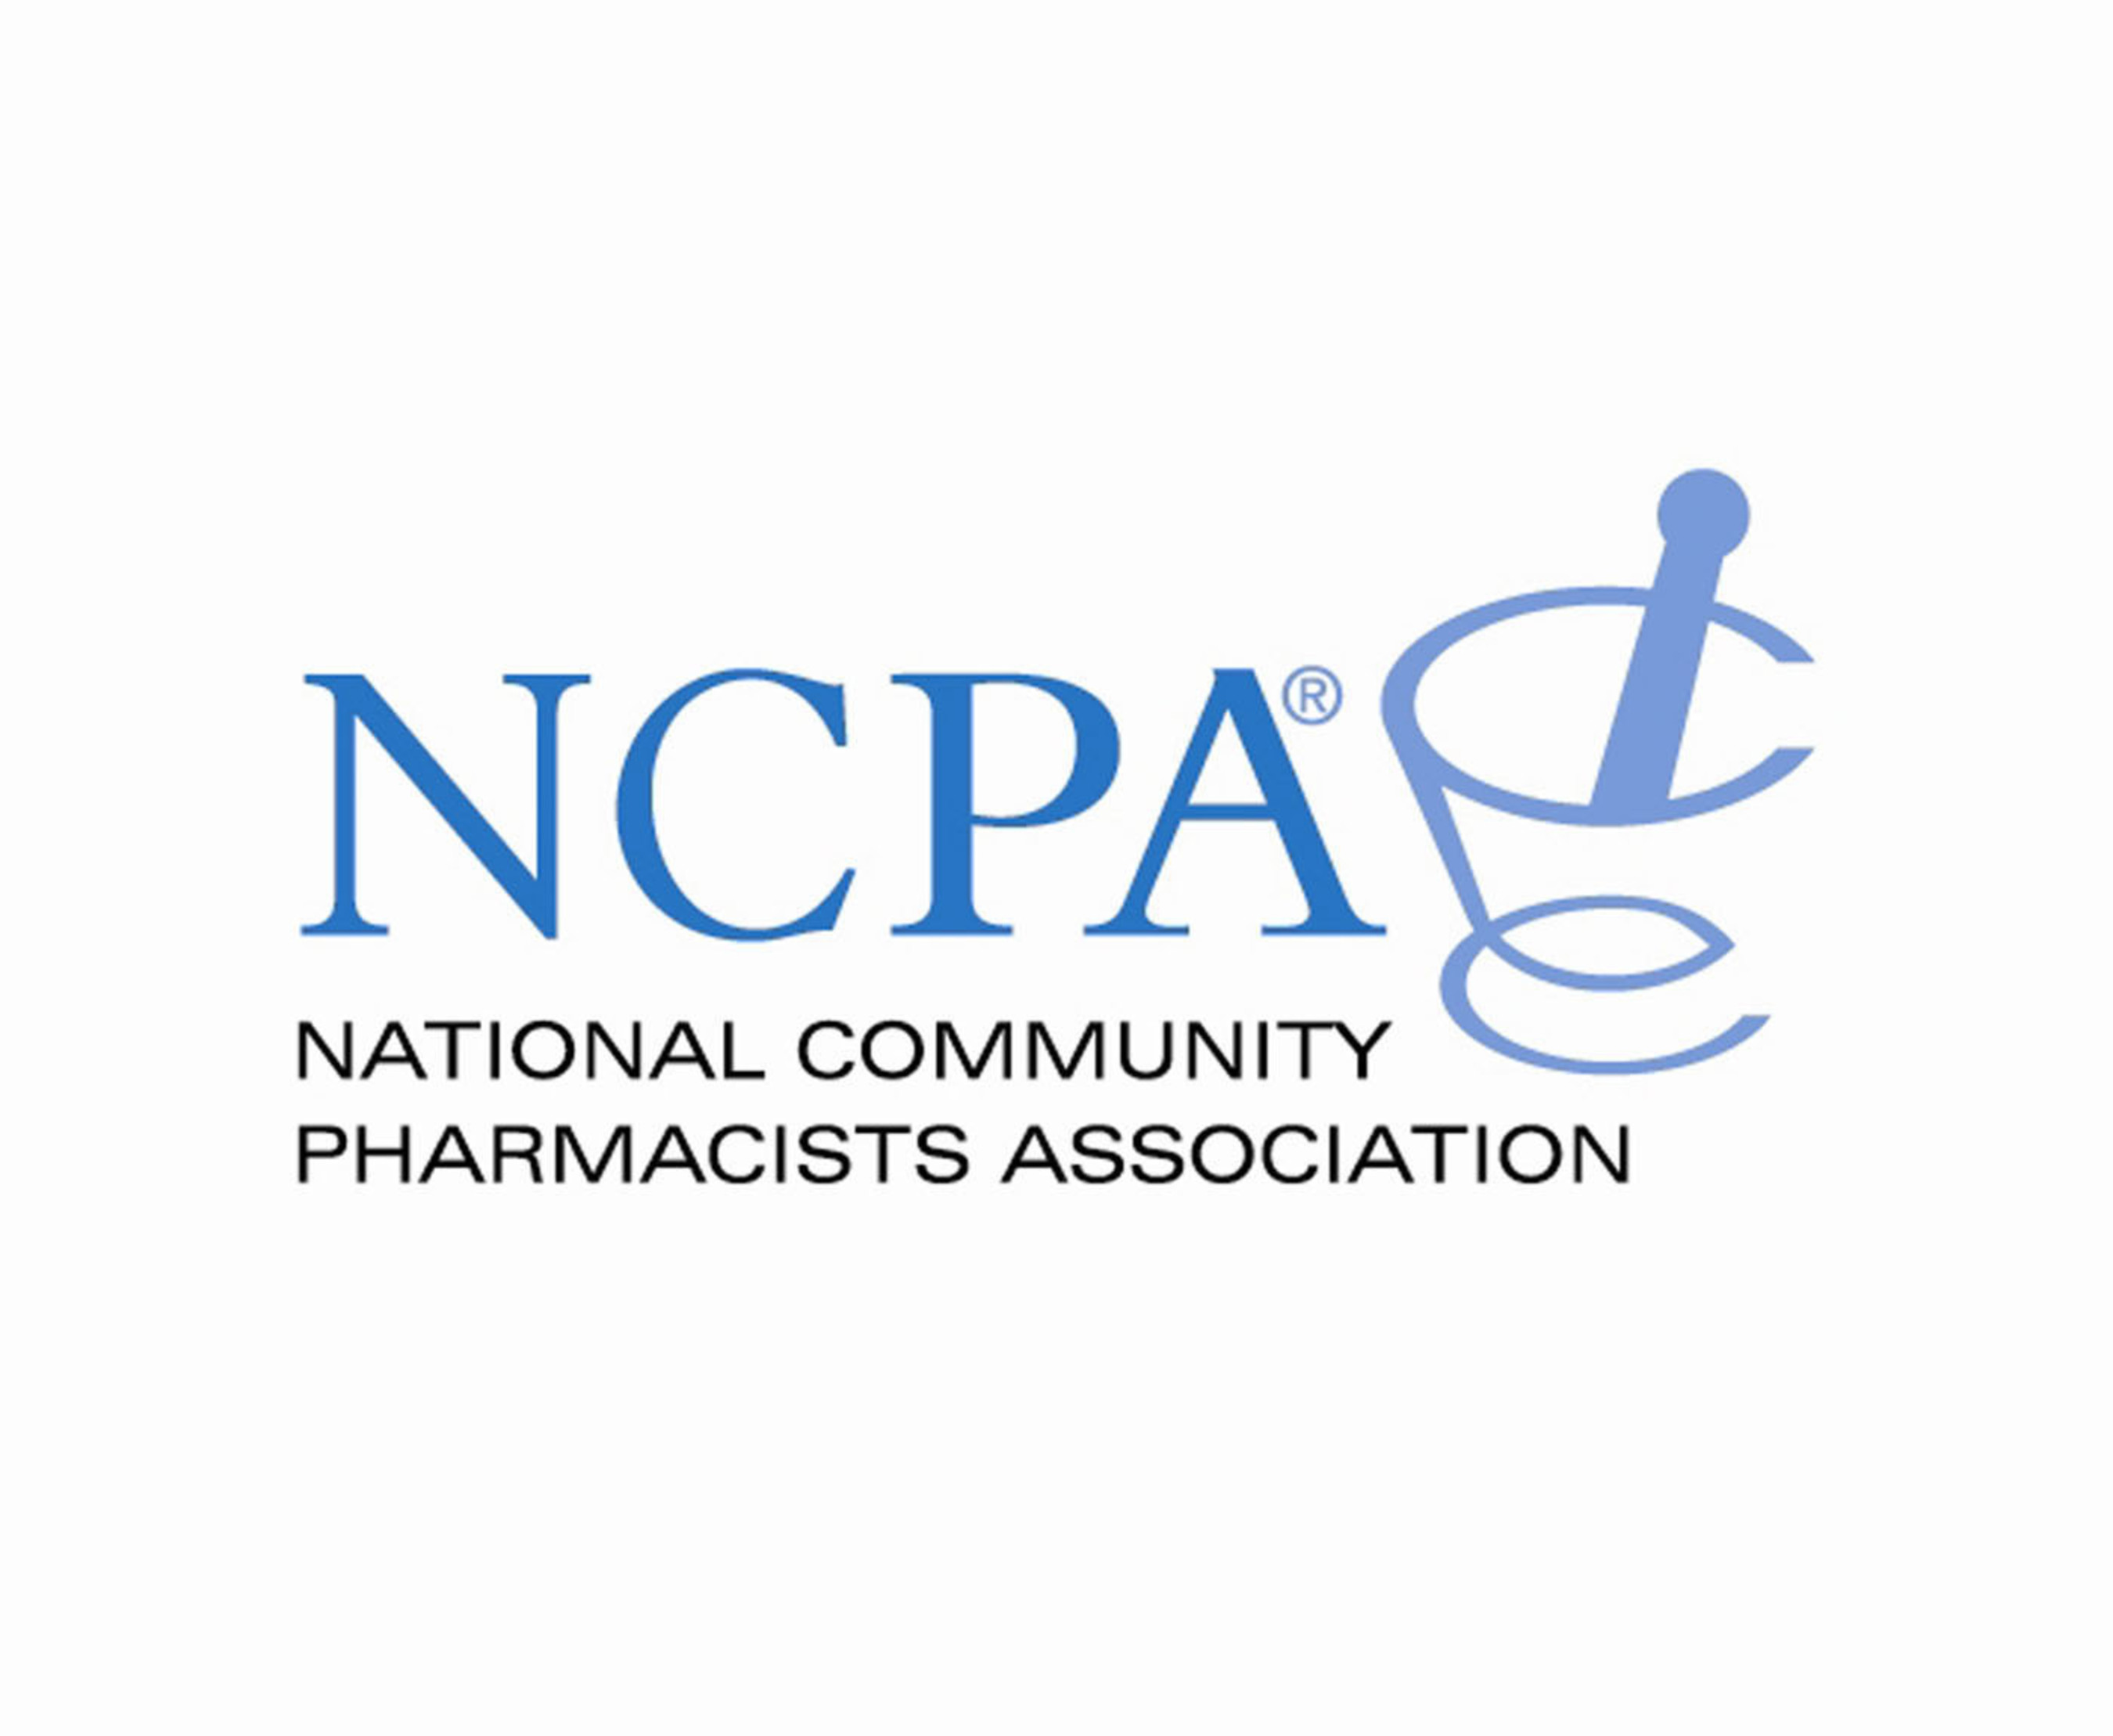 National Community Pharmacists Association Logo. (PRNewsFoto/NCPA)